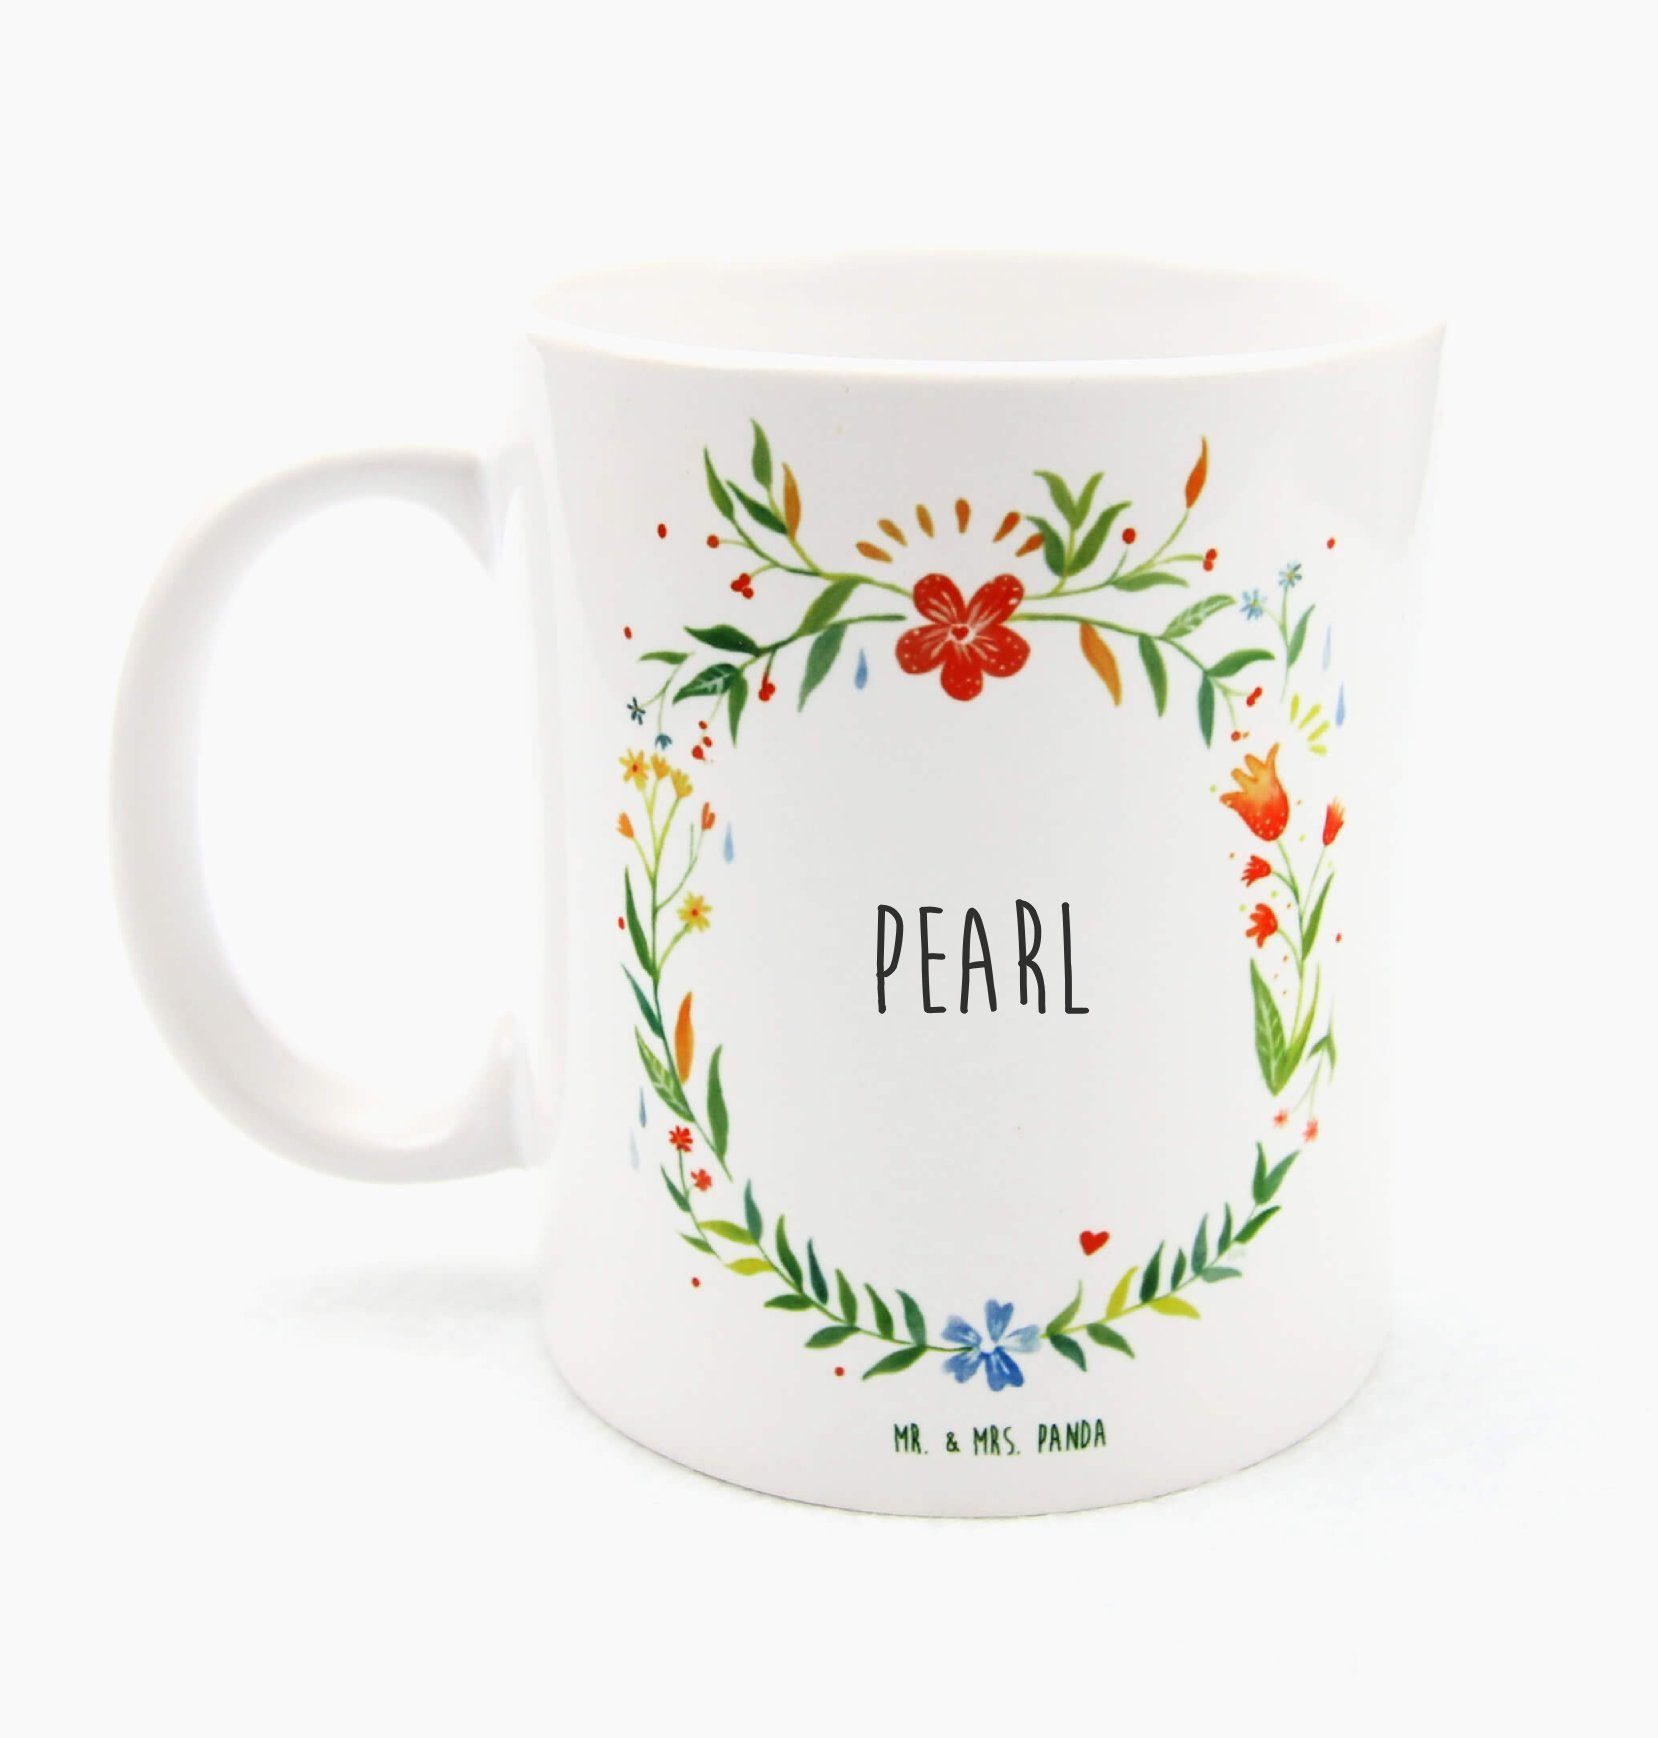 Mr. & Mrs. Panda Tasse Pearl - Geschenk, Tasse, Kaffeetasse, Becher, Tasse Motive, Teetasse, Keramik